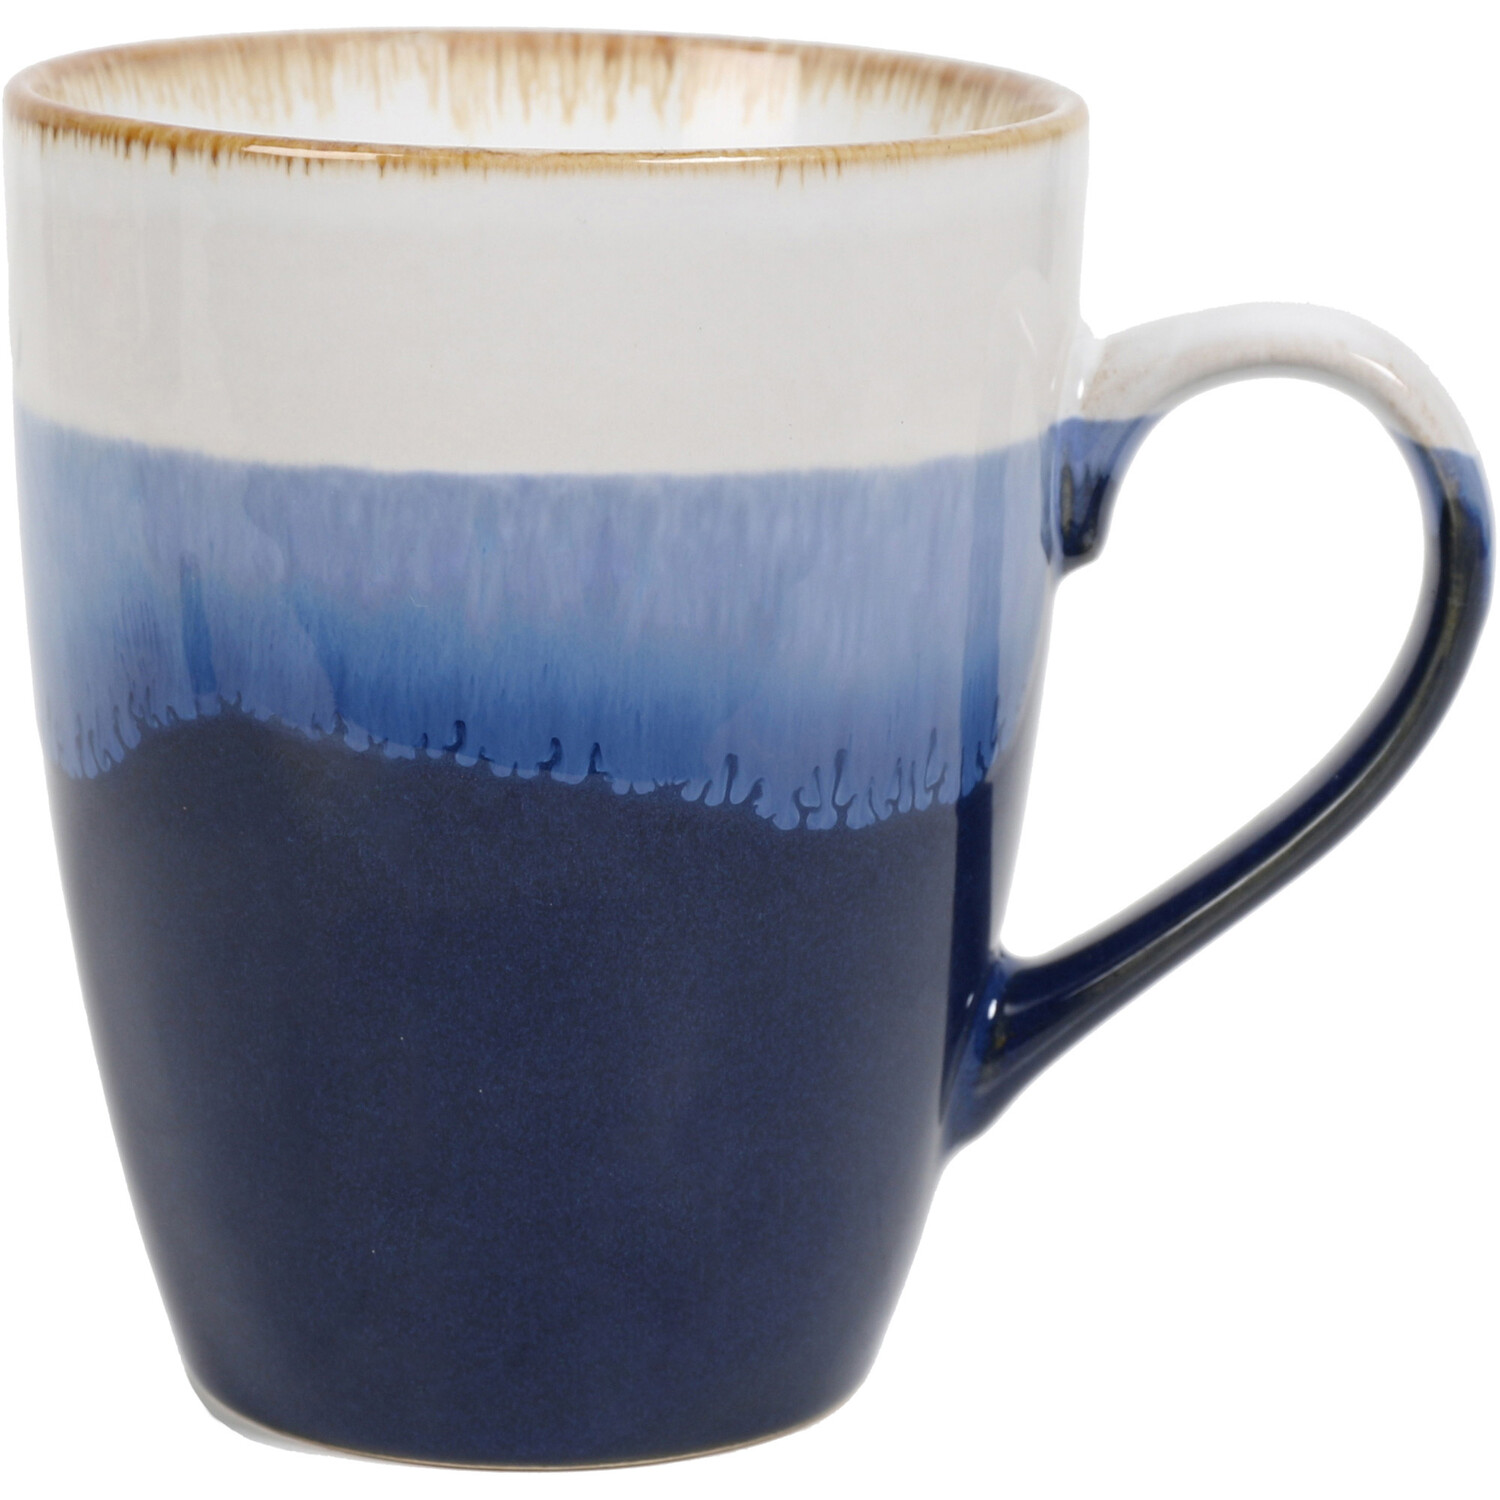 Stripes Reactive Glaze Mug - Blue Image 1